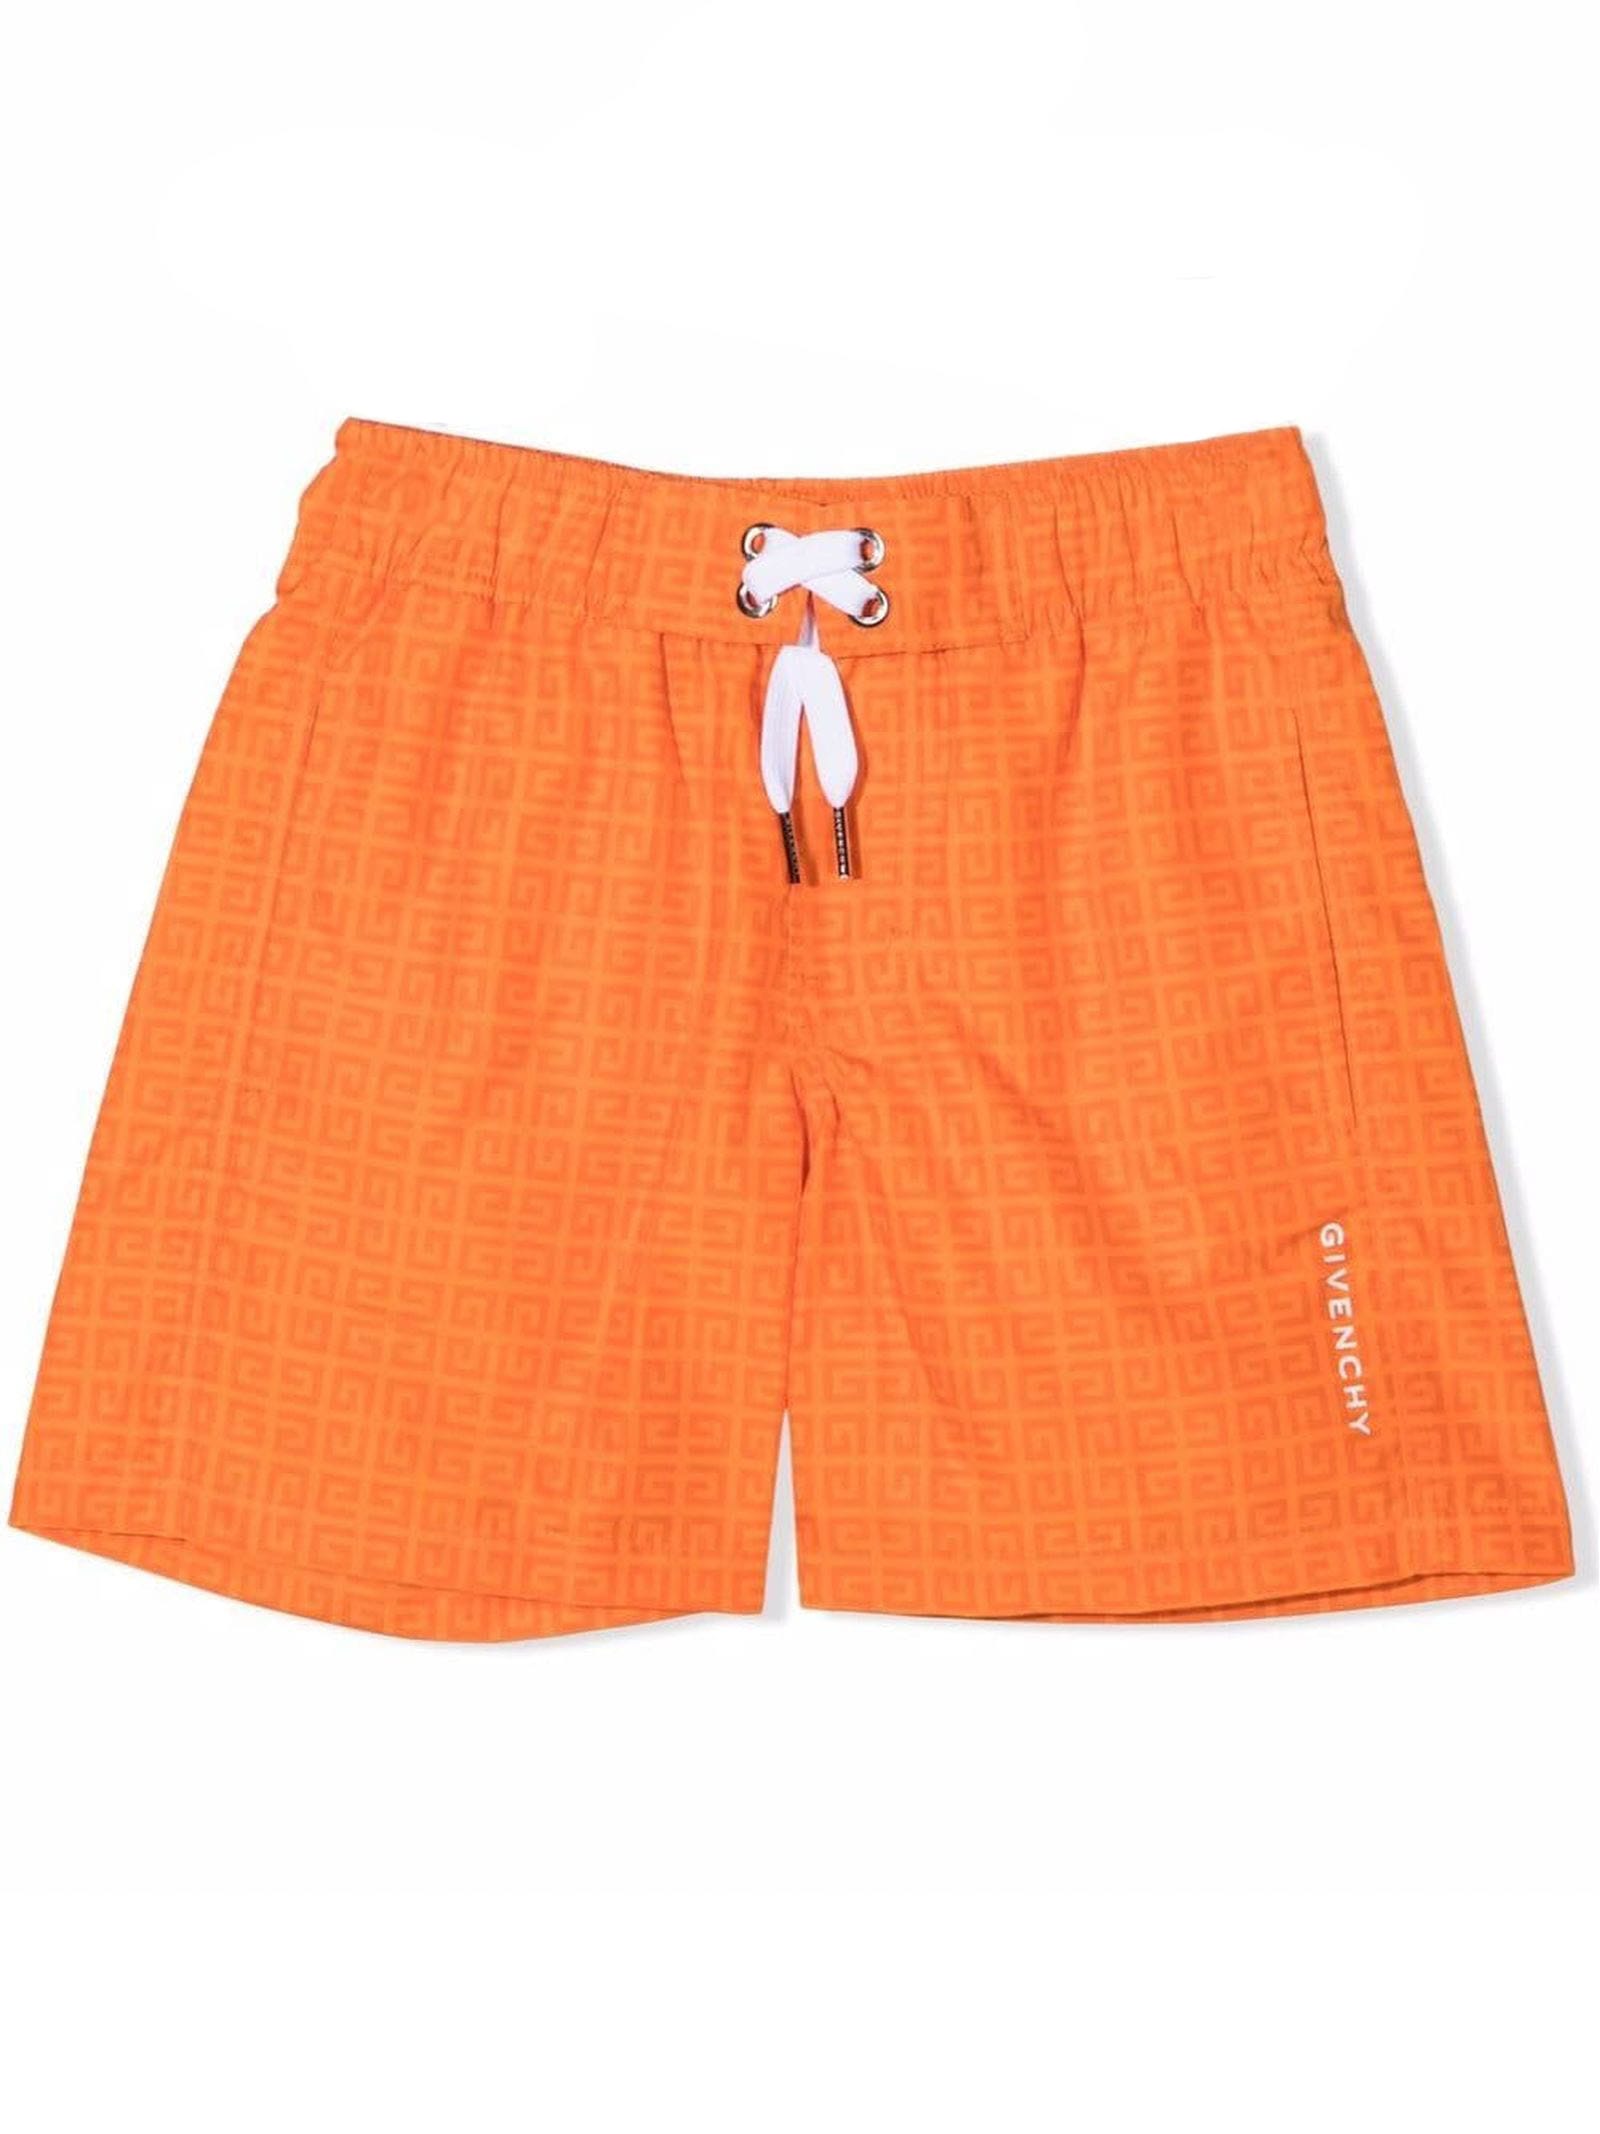 Givenchy Orange Polyester Swimsuit